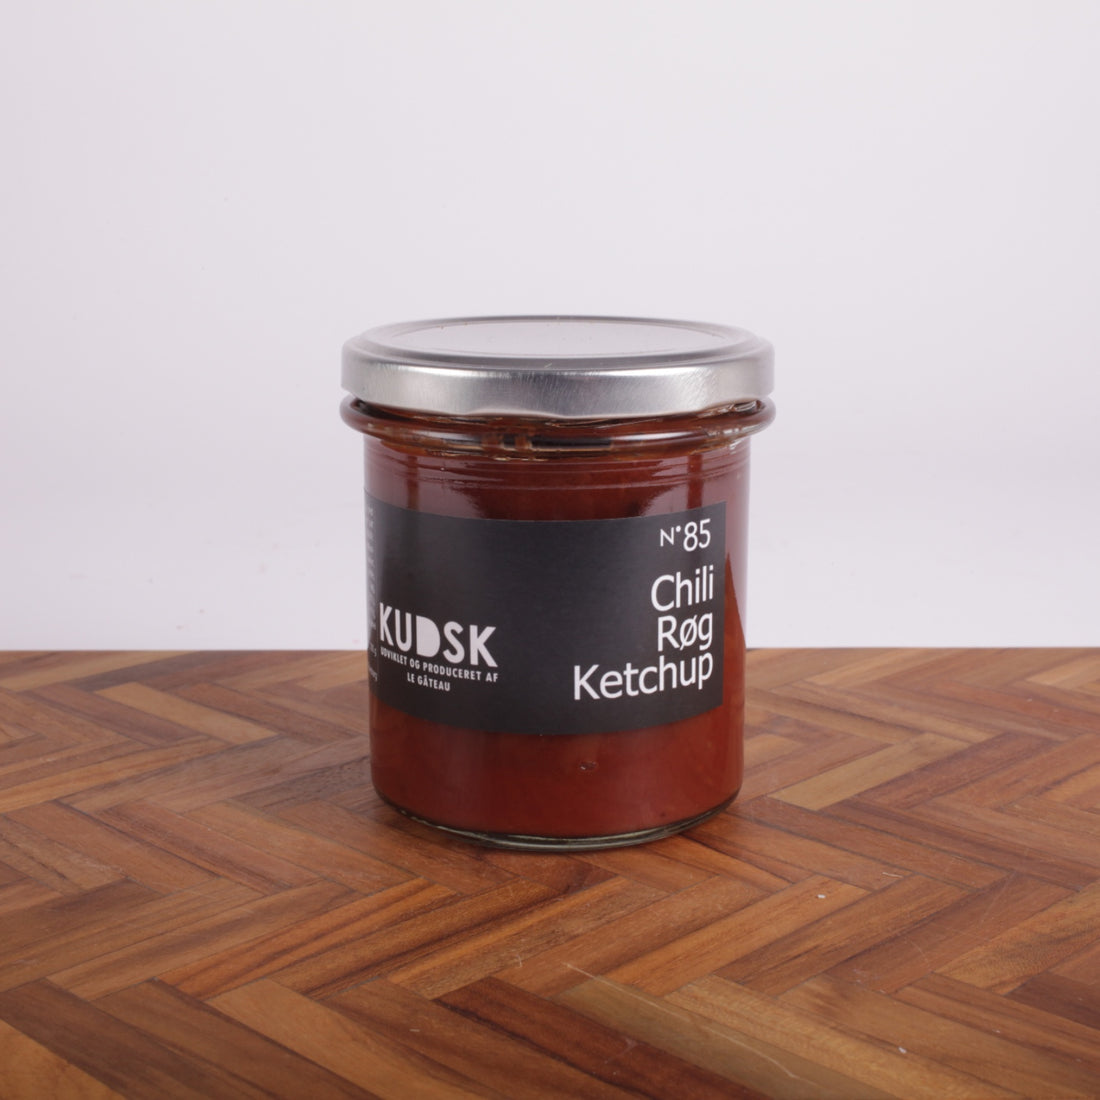 Kudsk - Chili røg ketchup